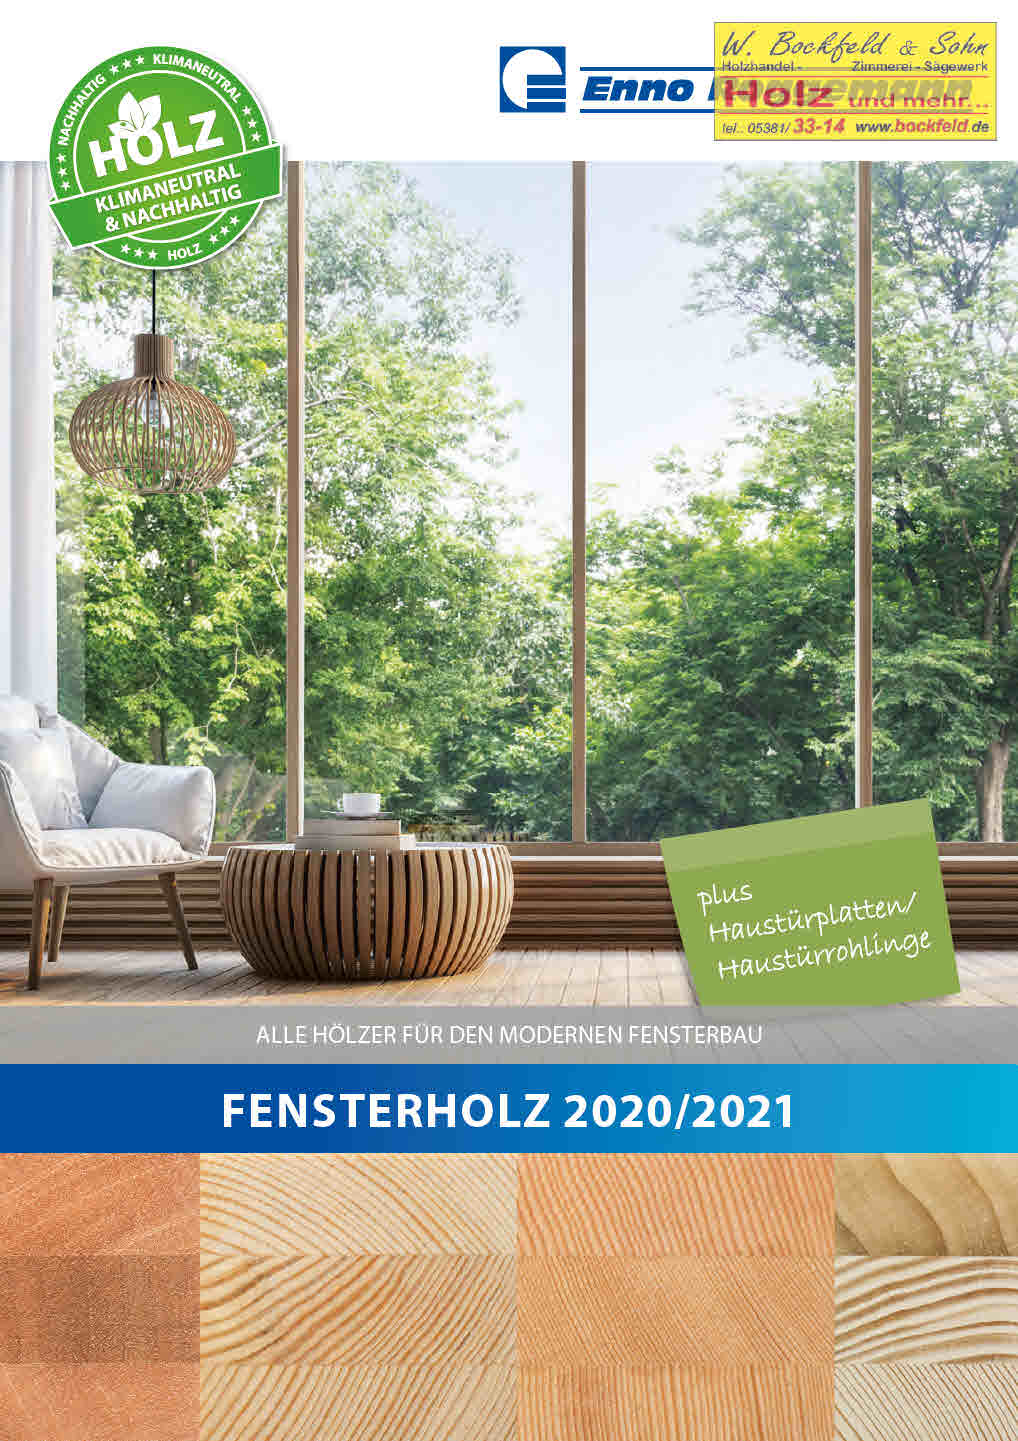 Fensterholz 2020 2021 wbs low seite1 - Kataloge